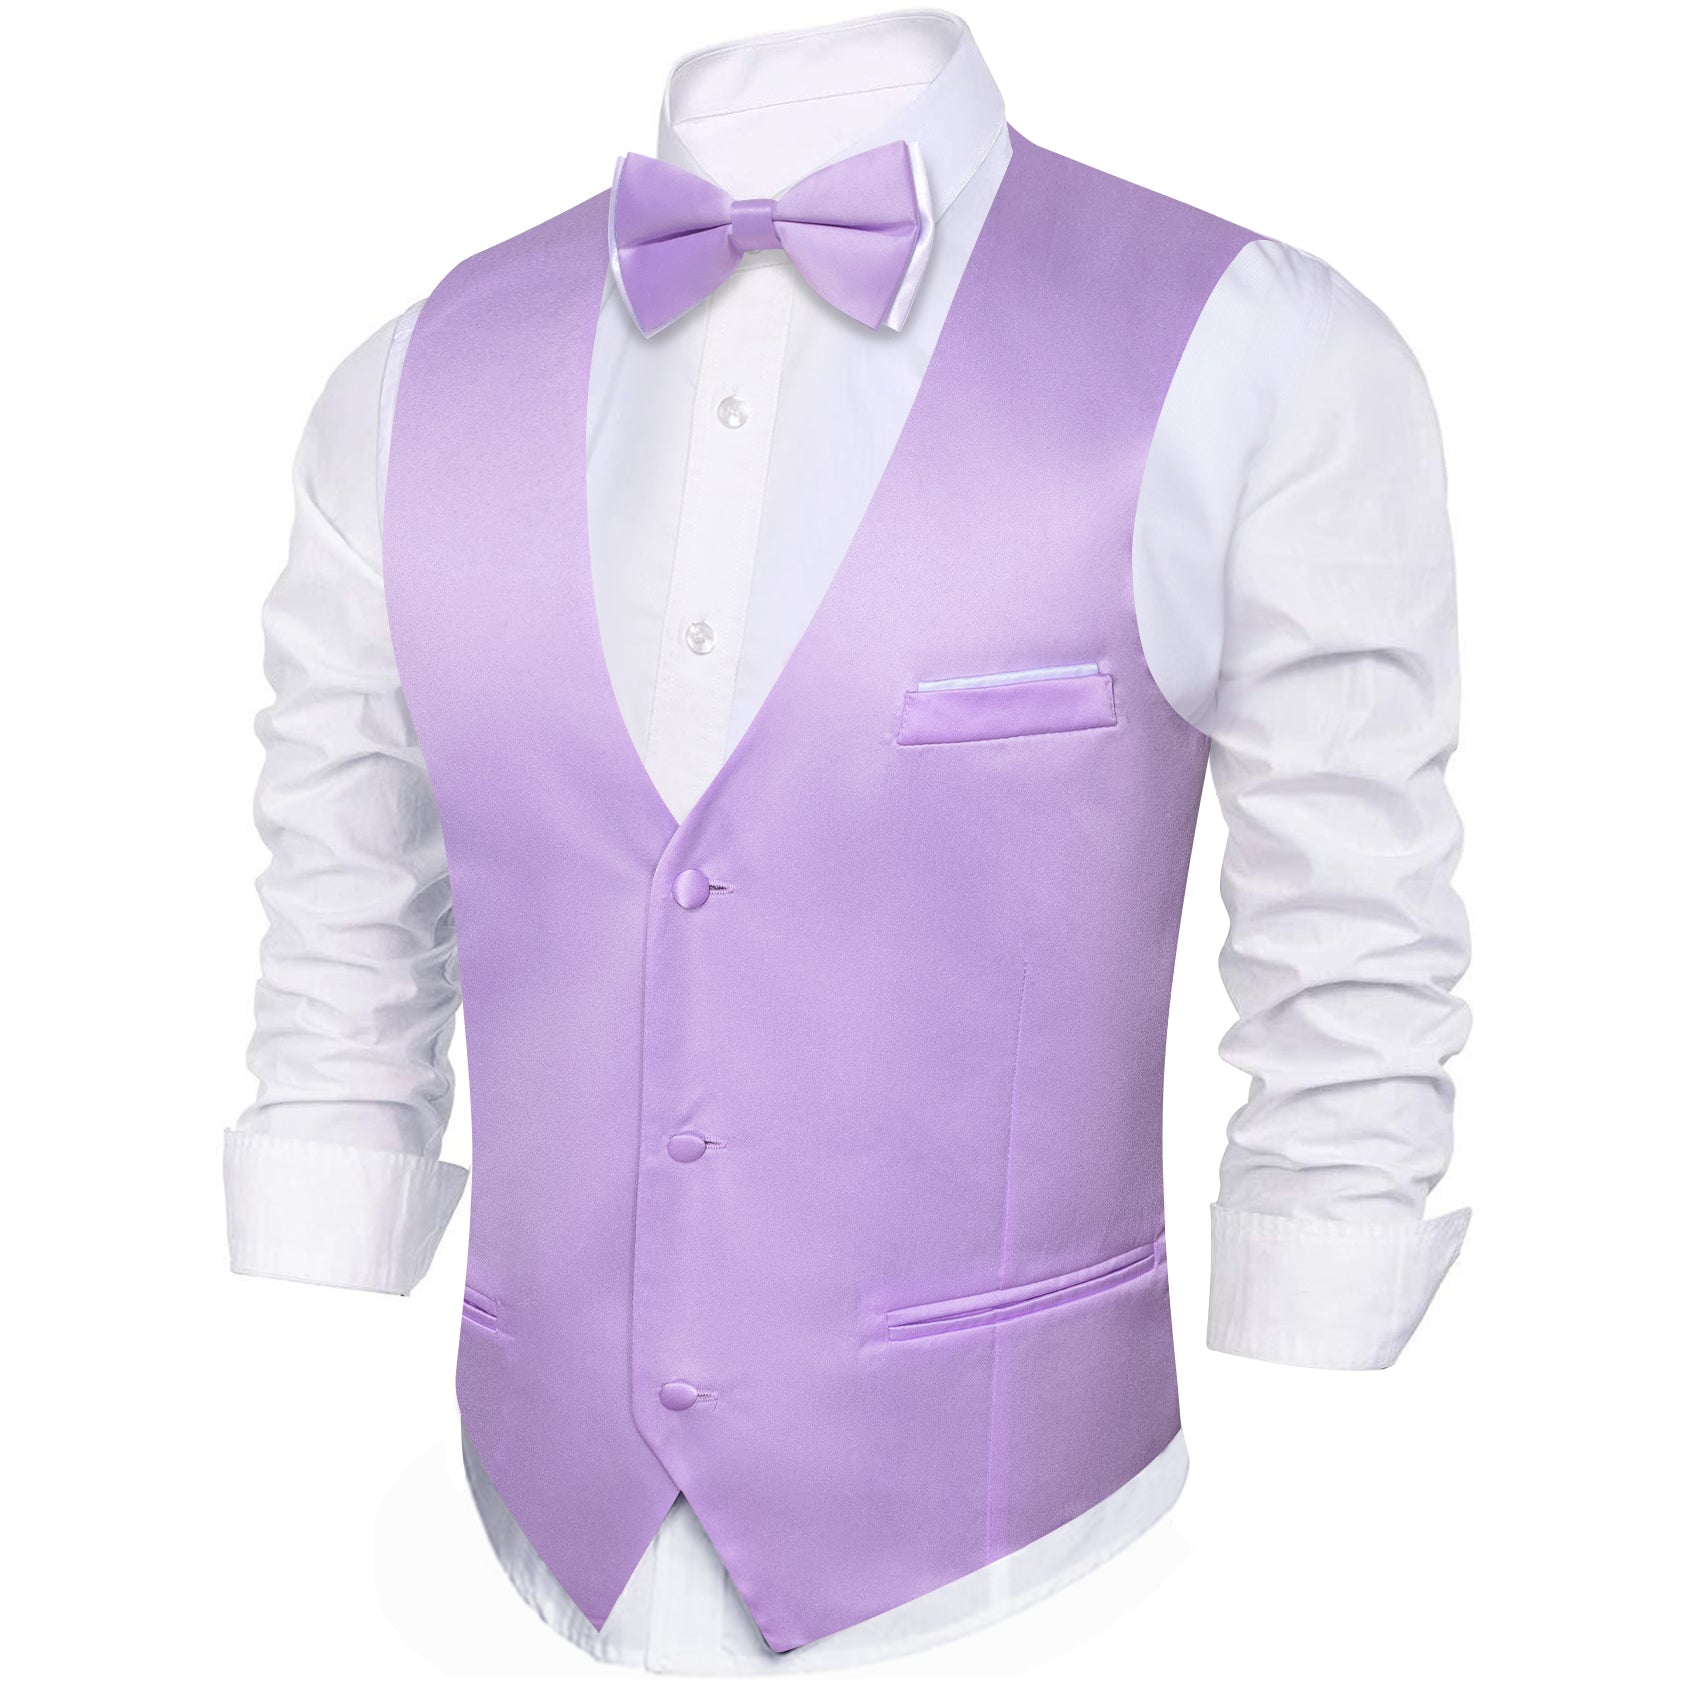 Mist Violet Solid Silk Vest Bowtie Pocket Square Cufflinks Set